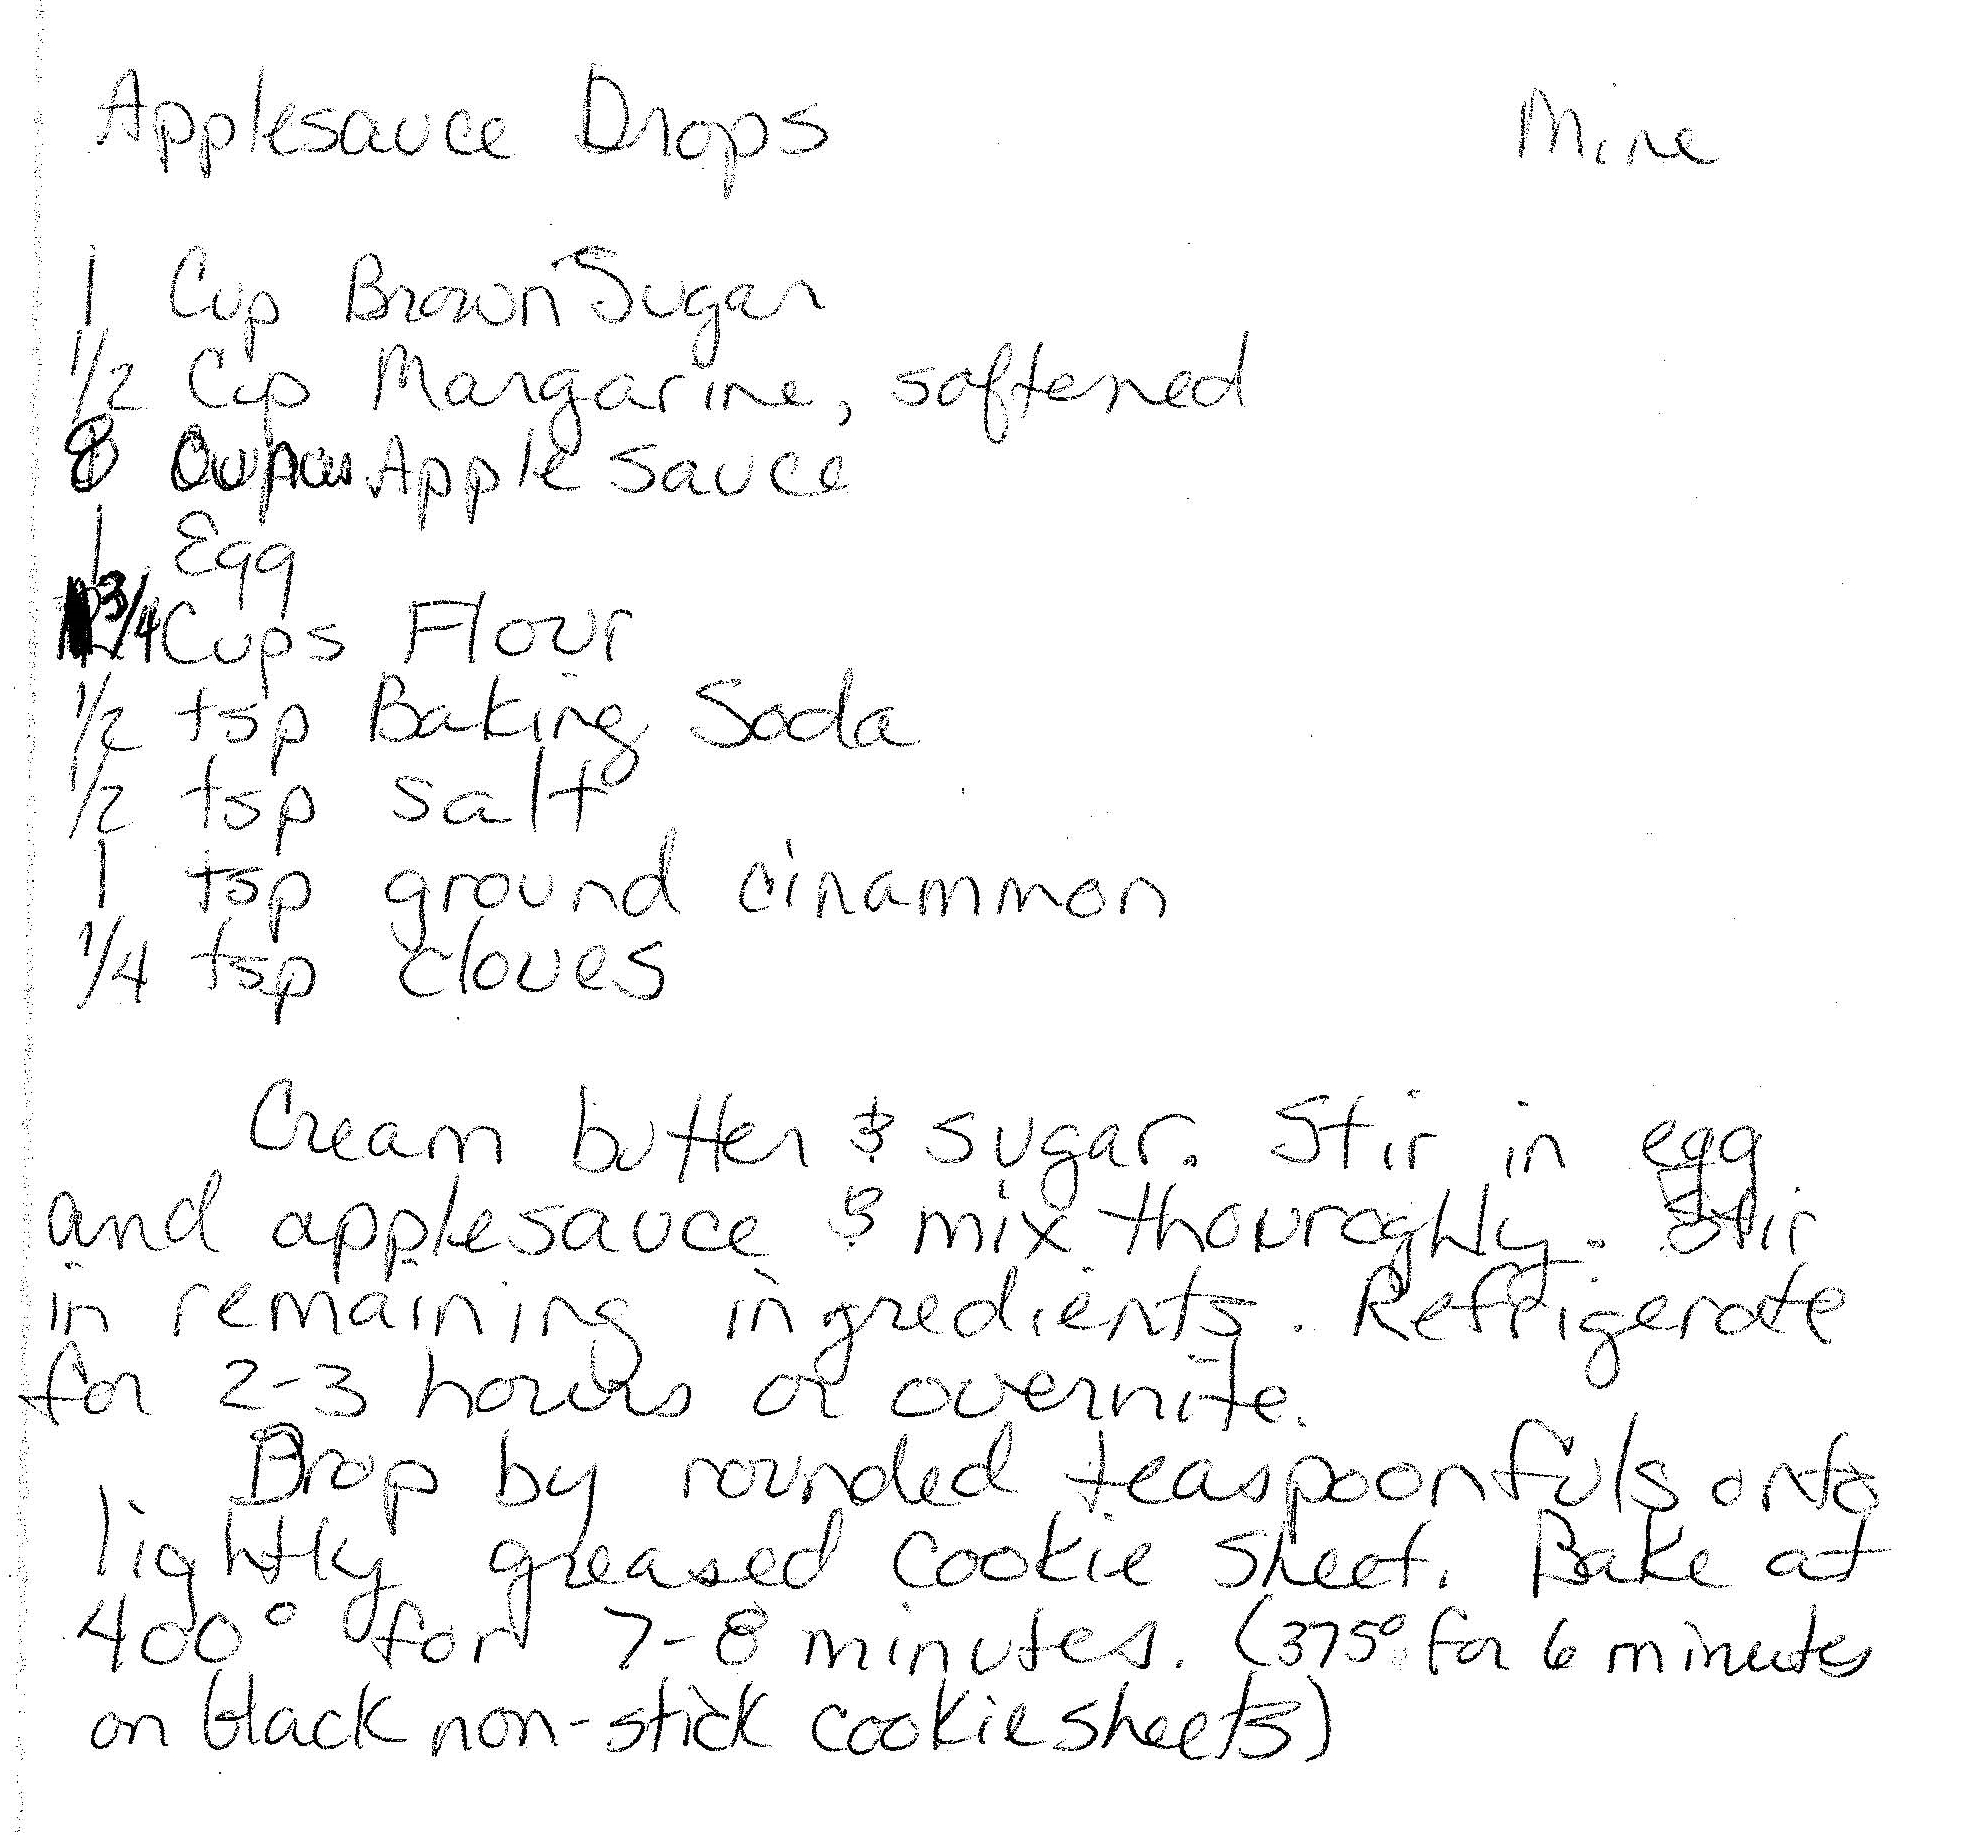 Applesauce Drops Recipe